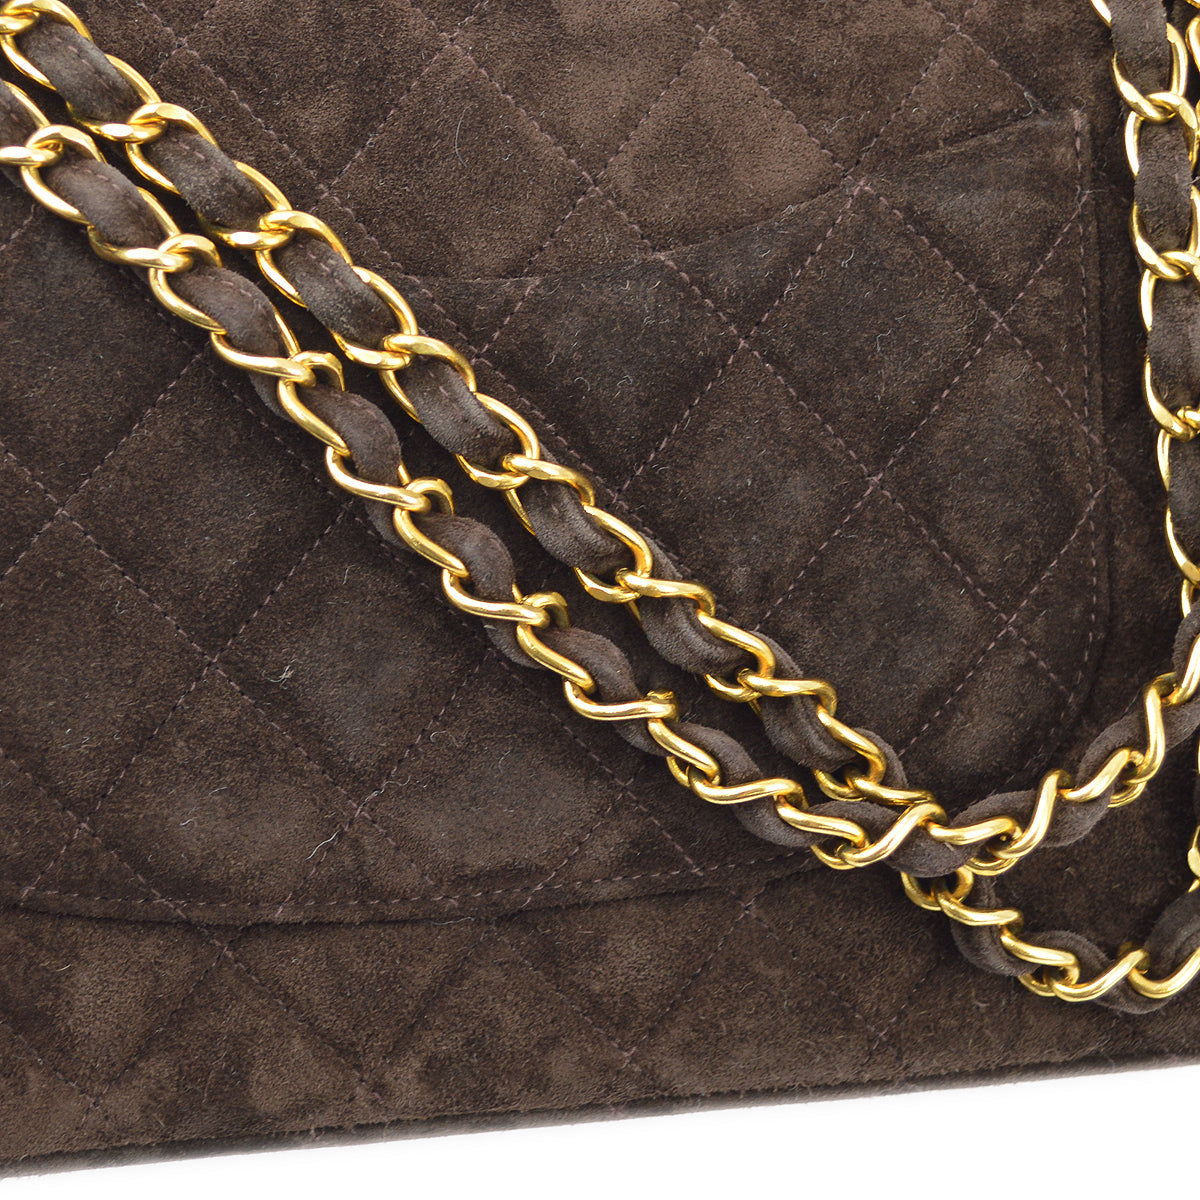 Chanel Brown Suede Medium Classic Double Flap Shoulder Bag